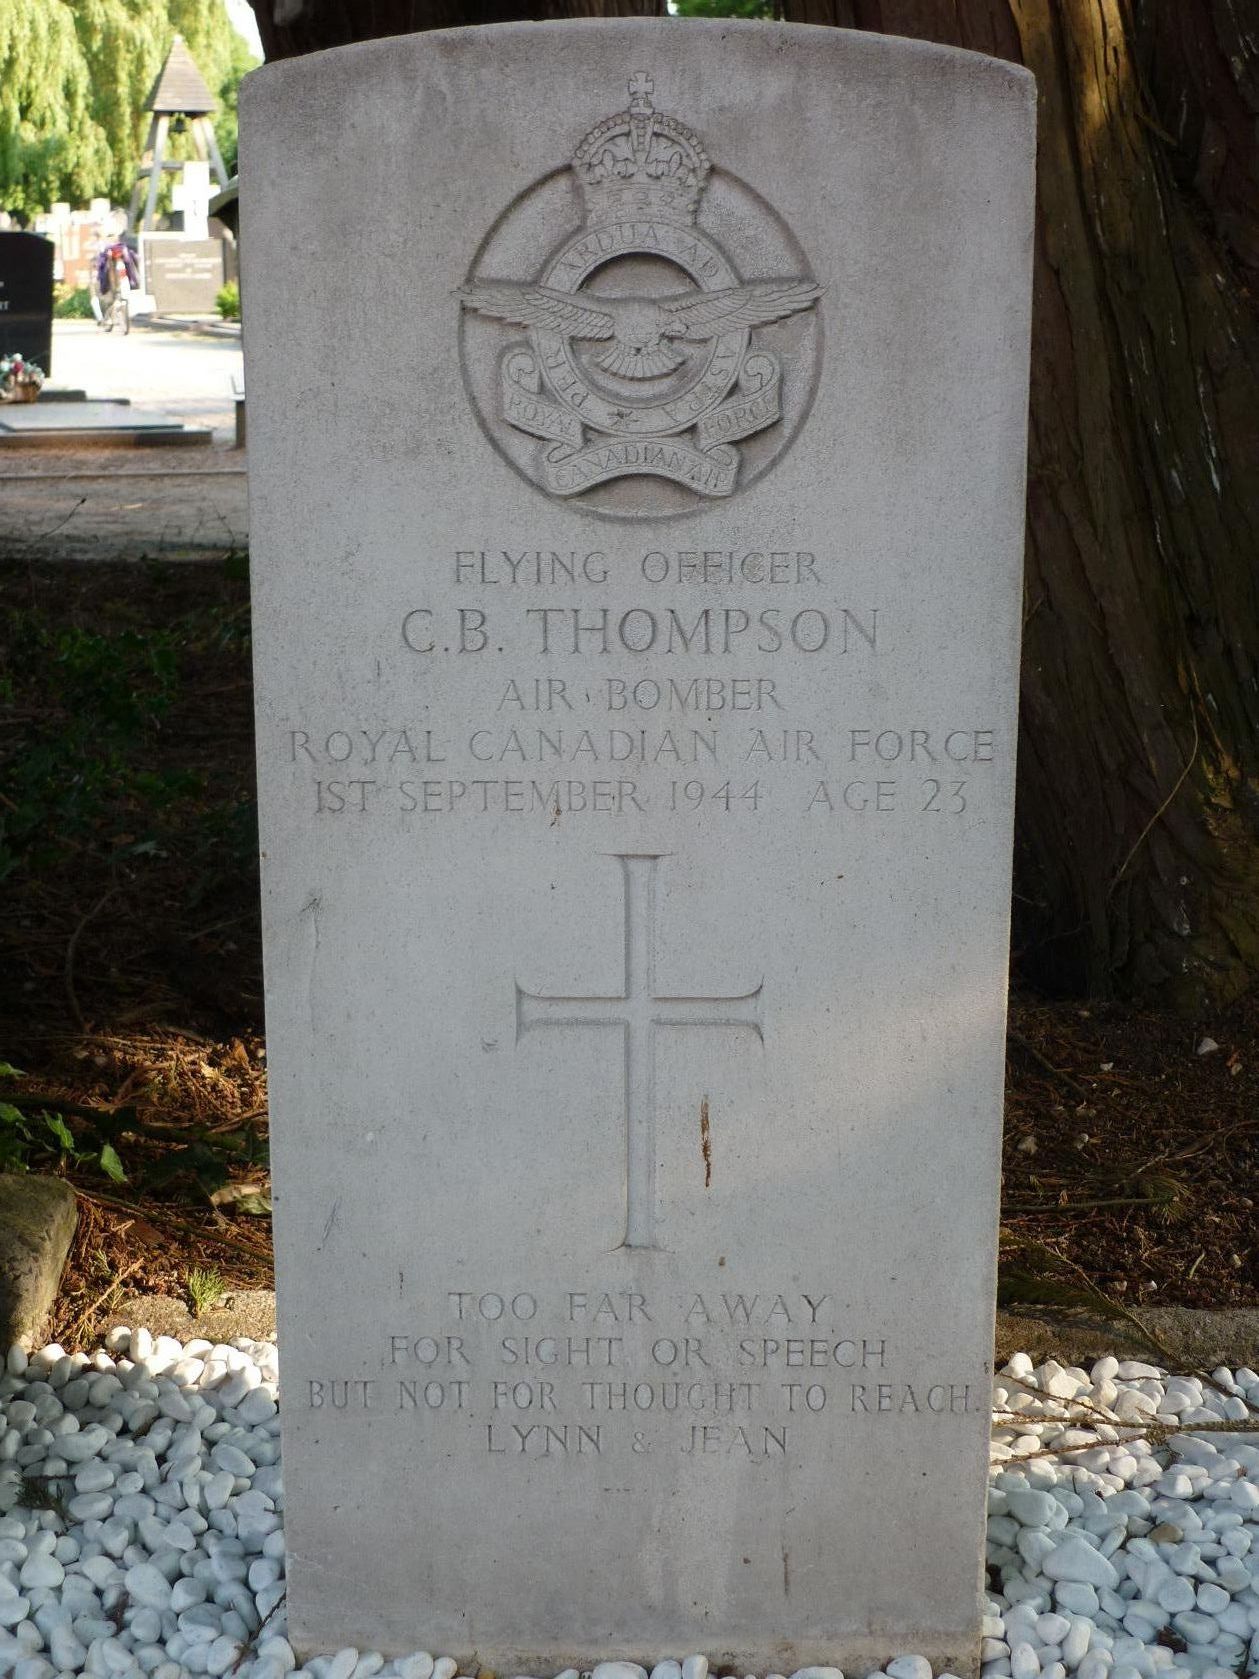 C. Thompson (Grave)